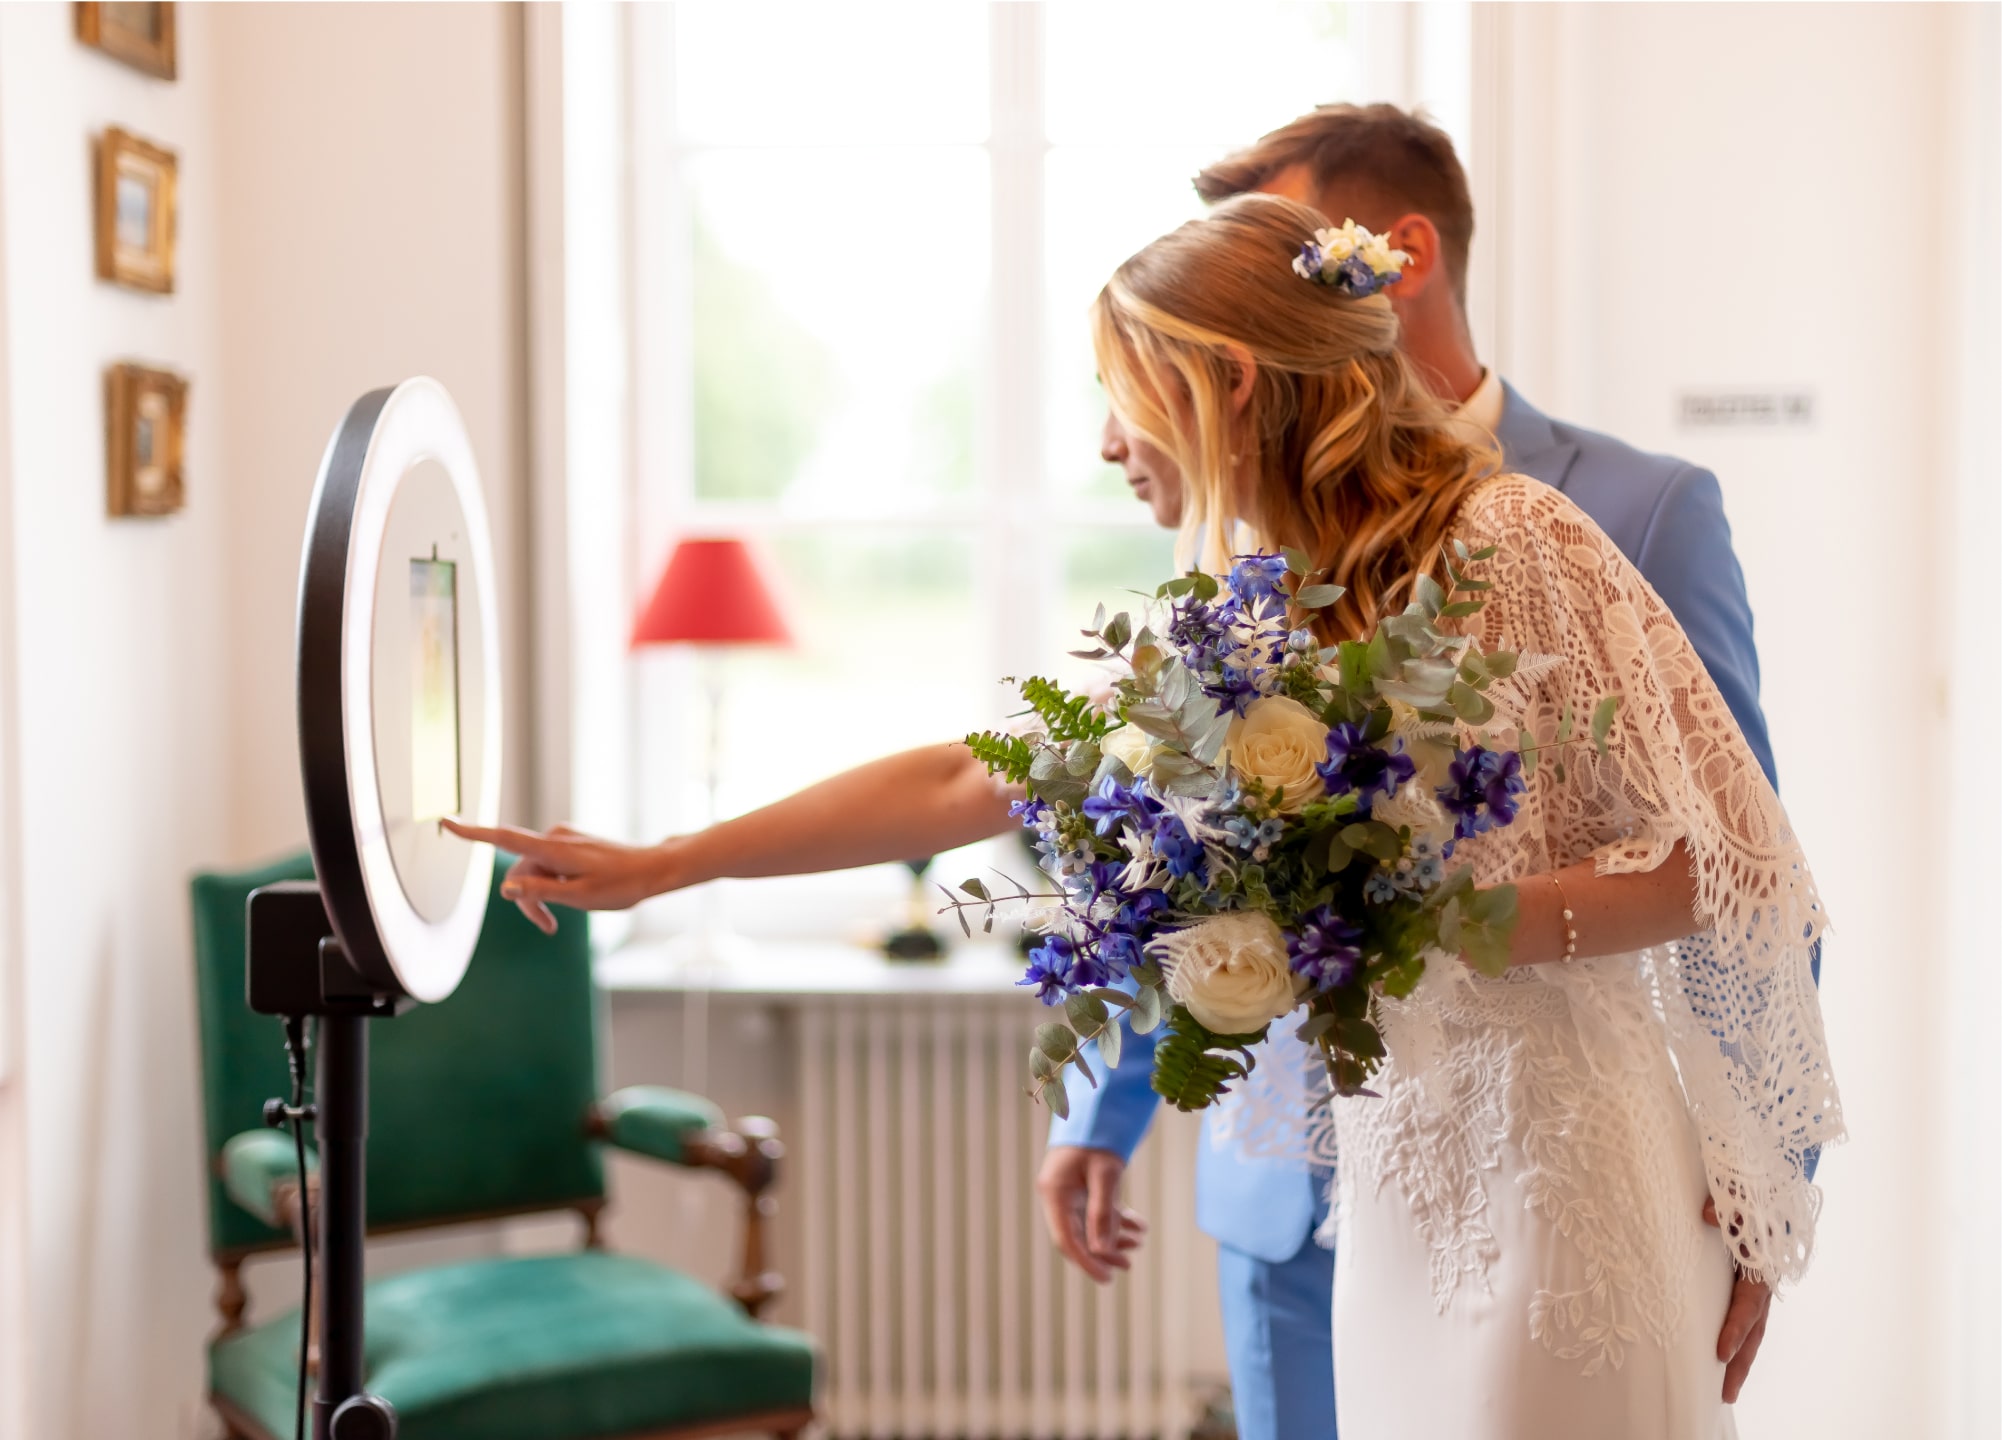 Photobooth mariage